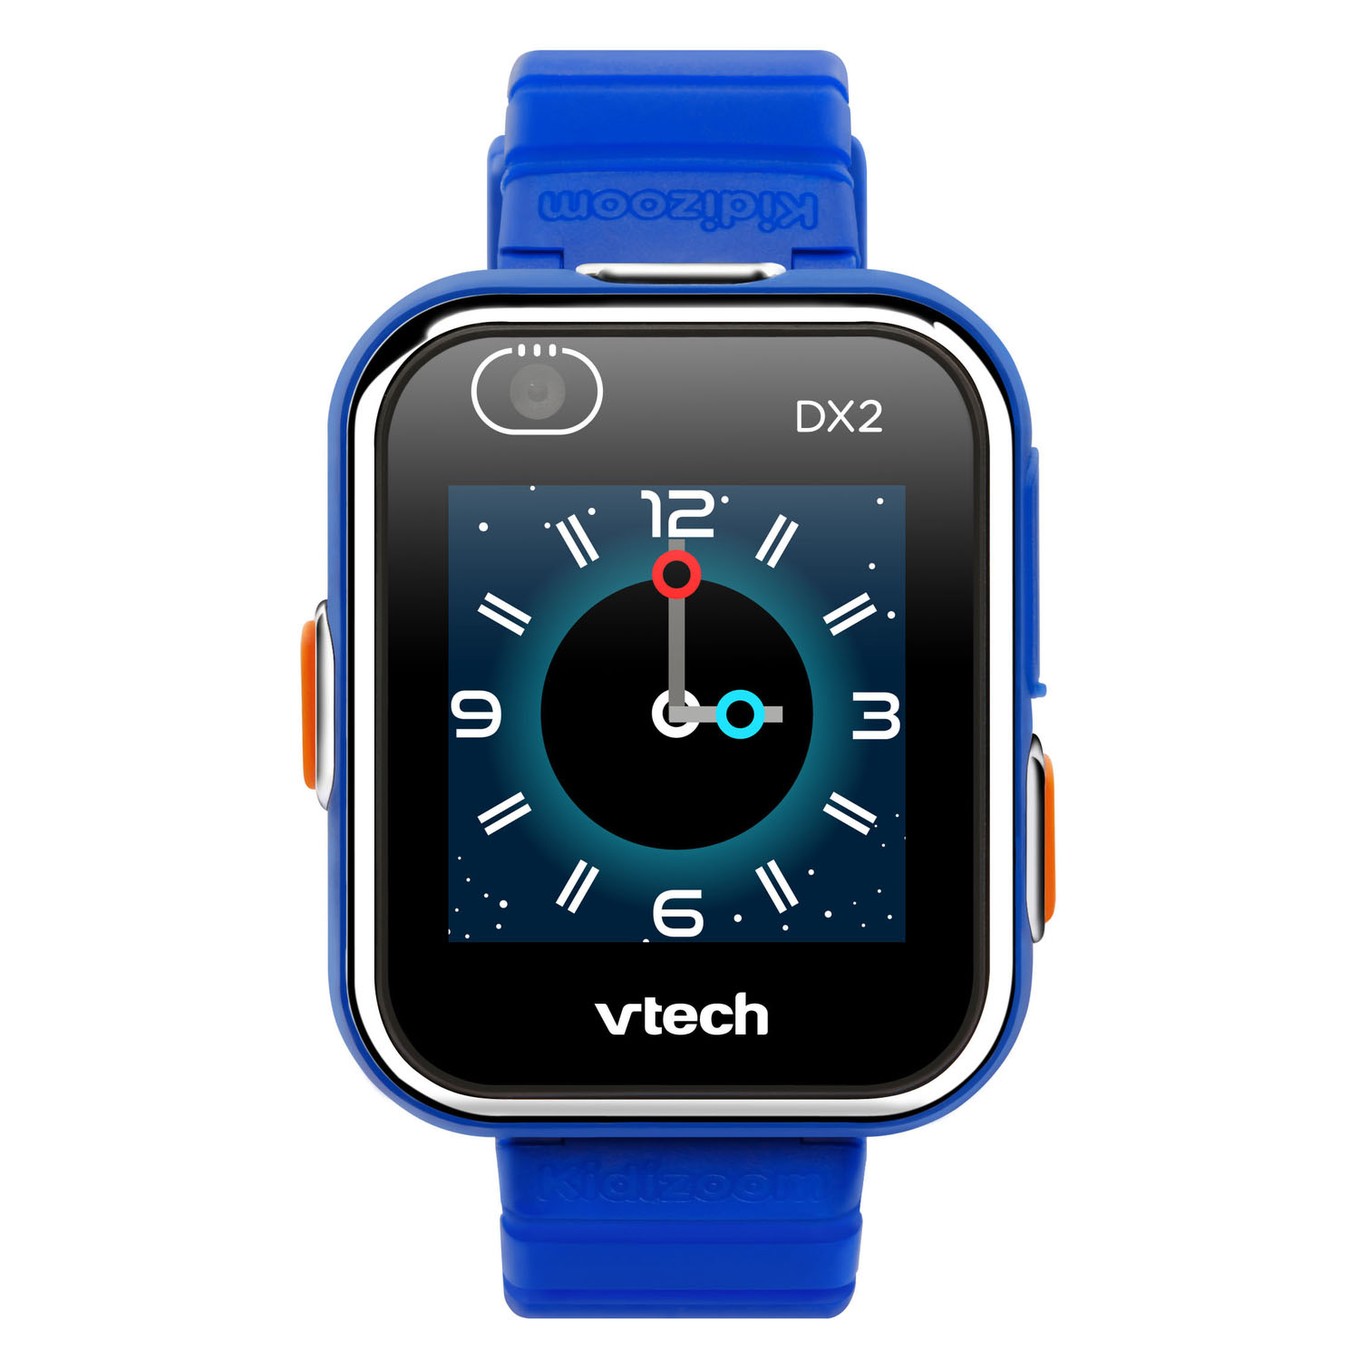 vtech camera watch